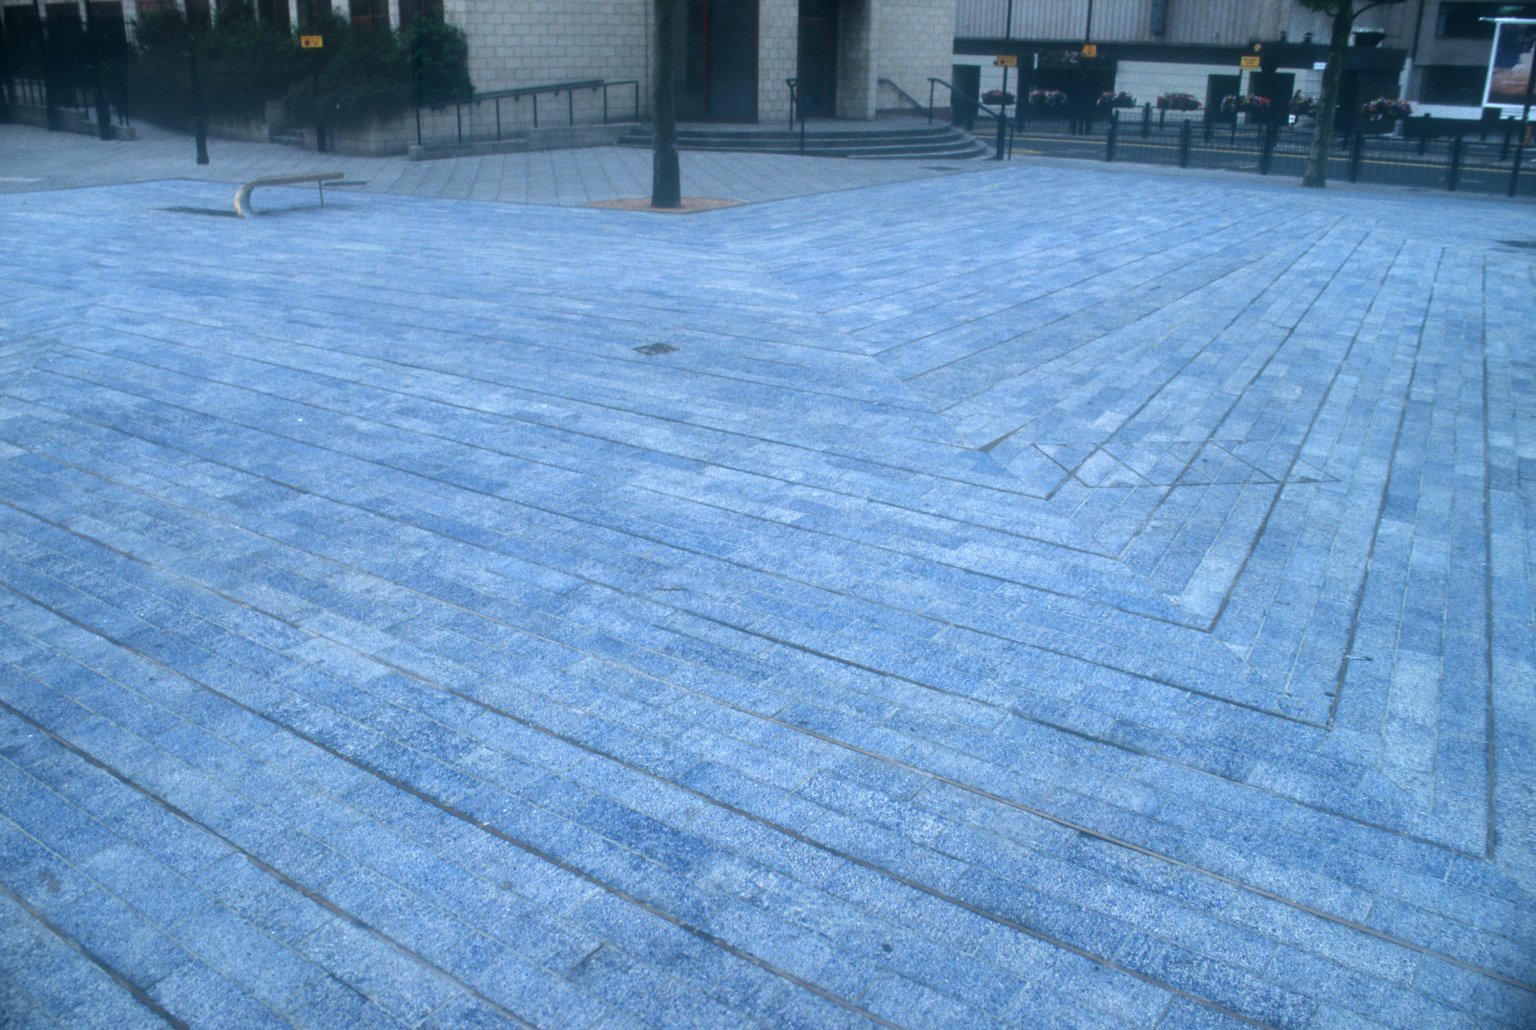 Blue Carpet